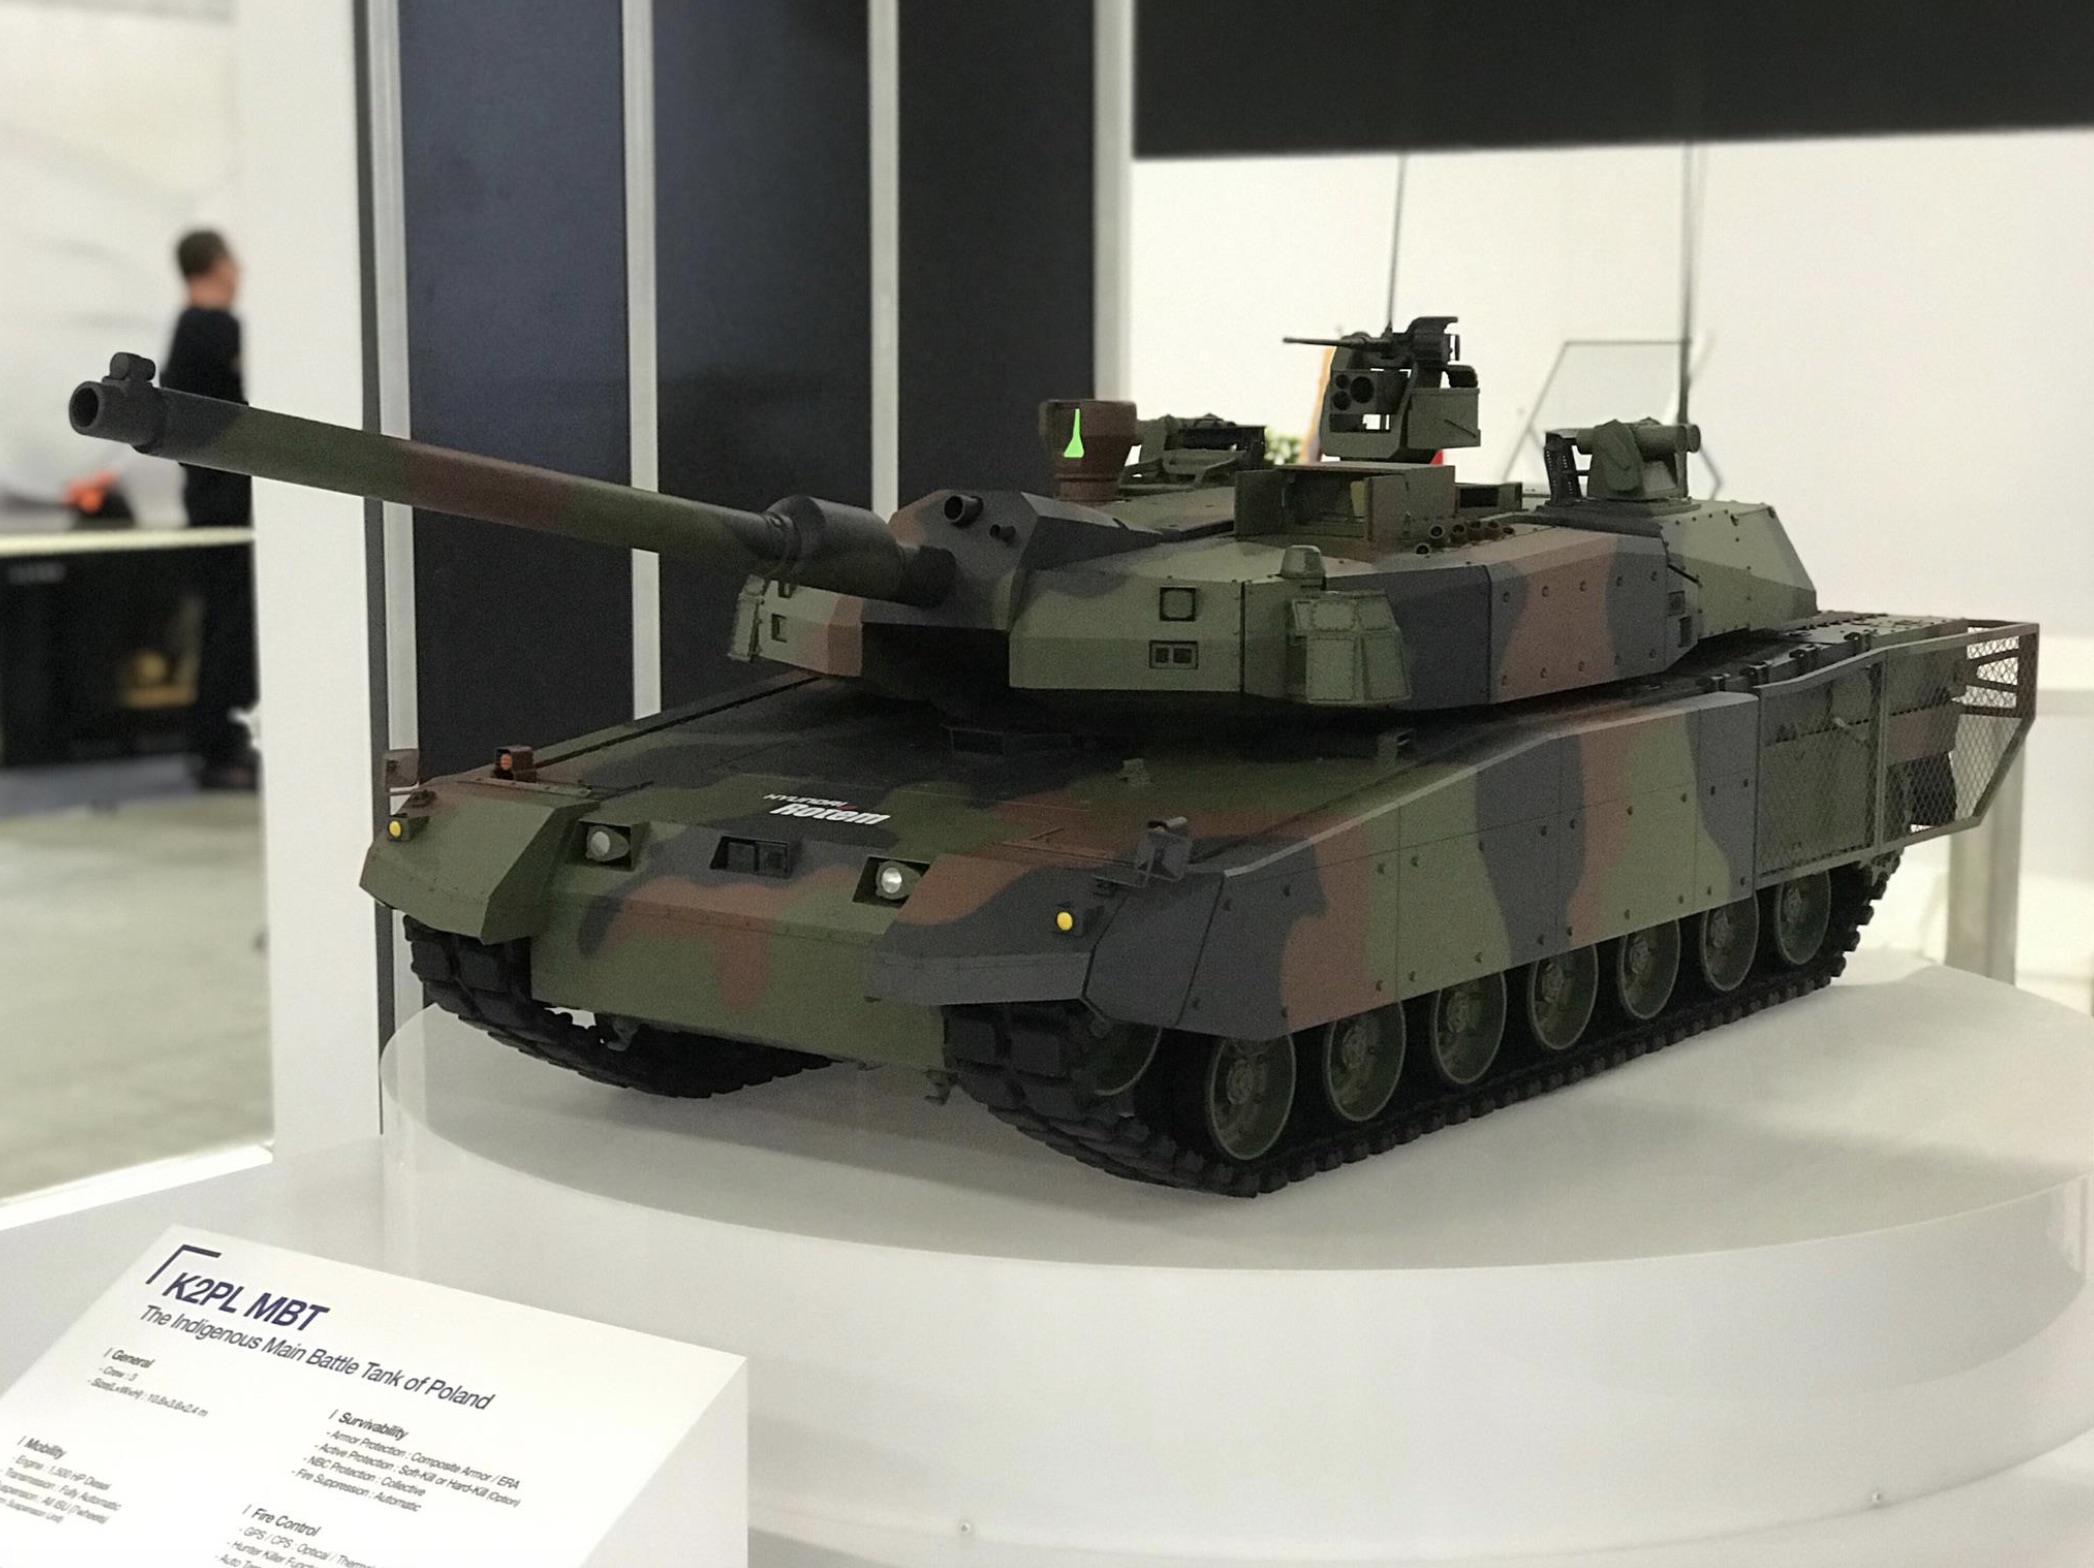 future main battle tank designs